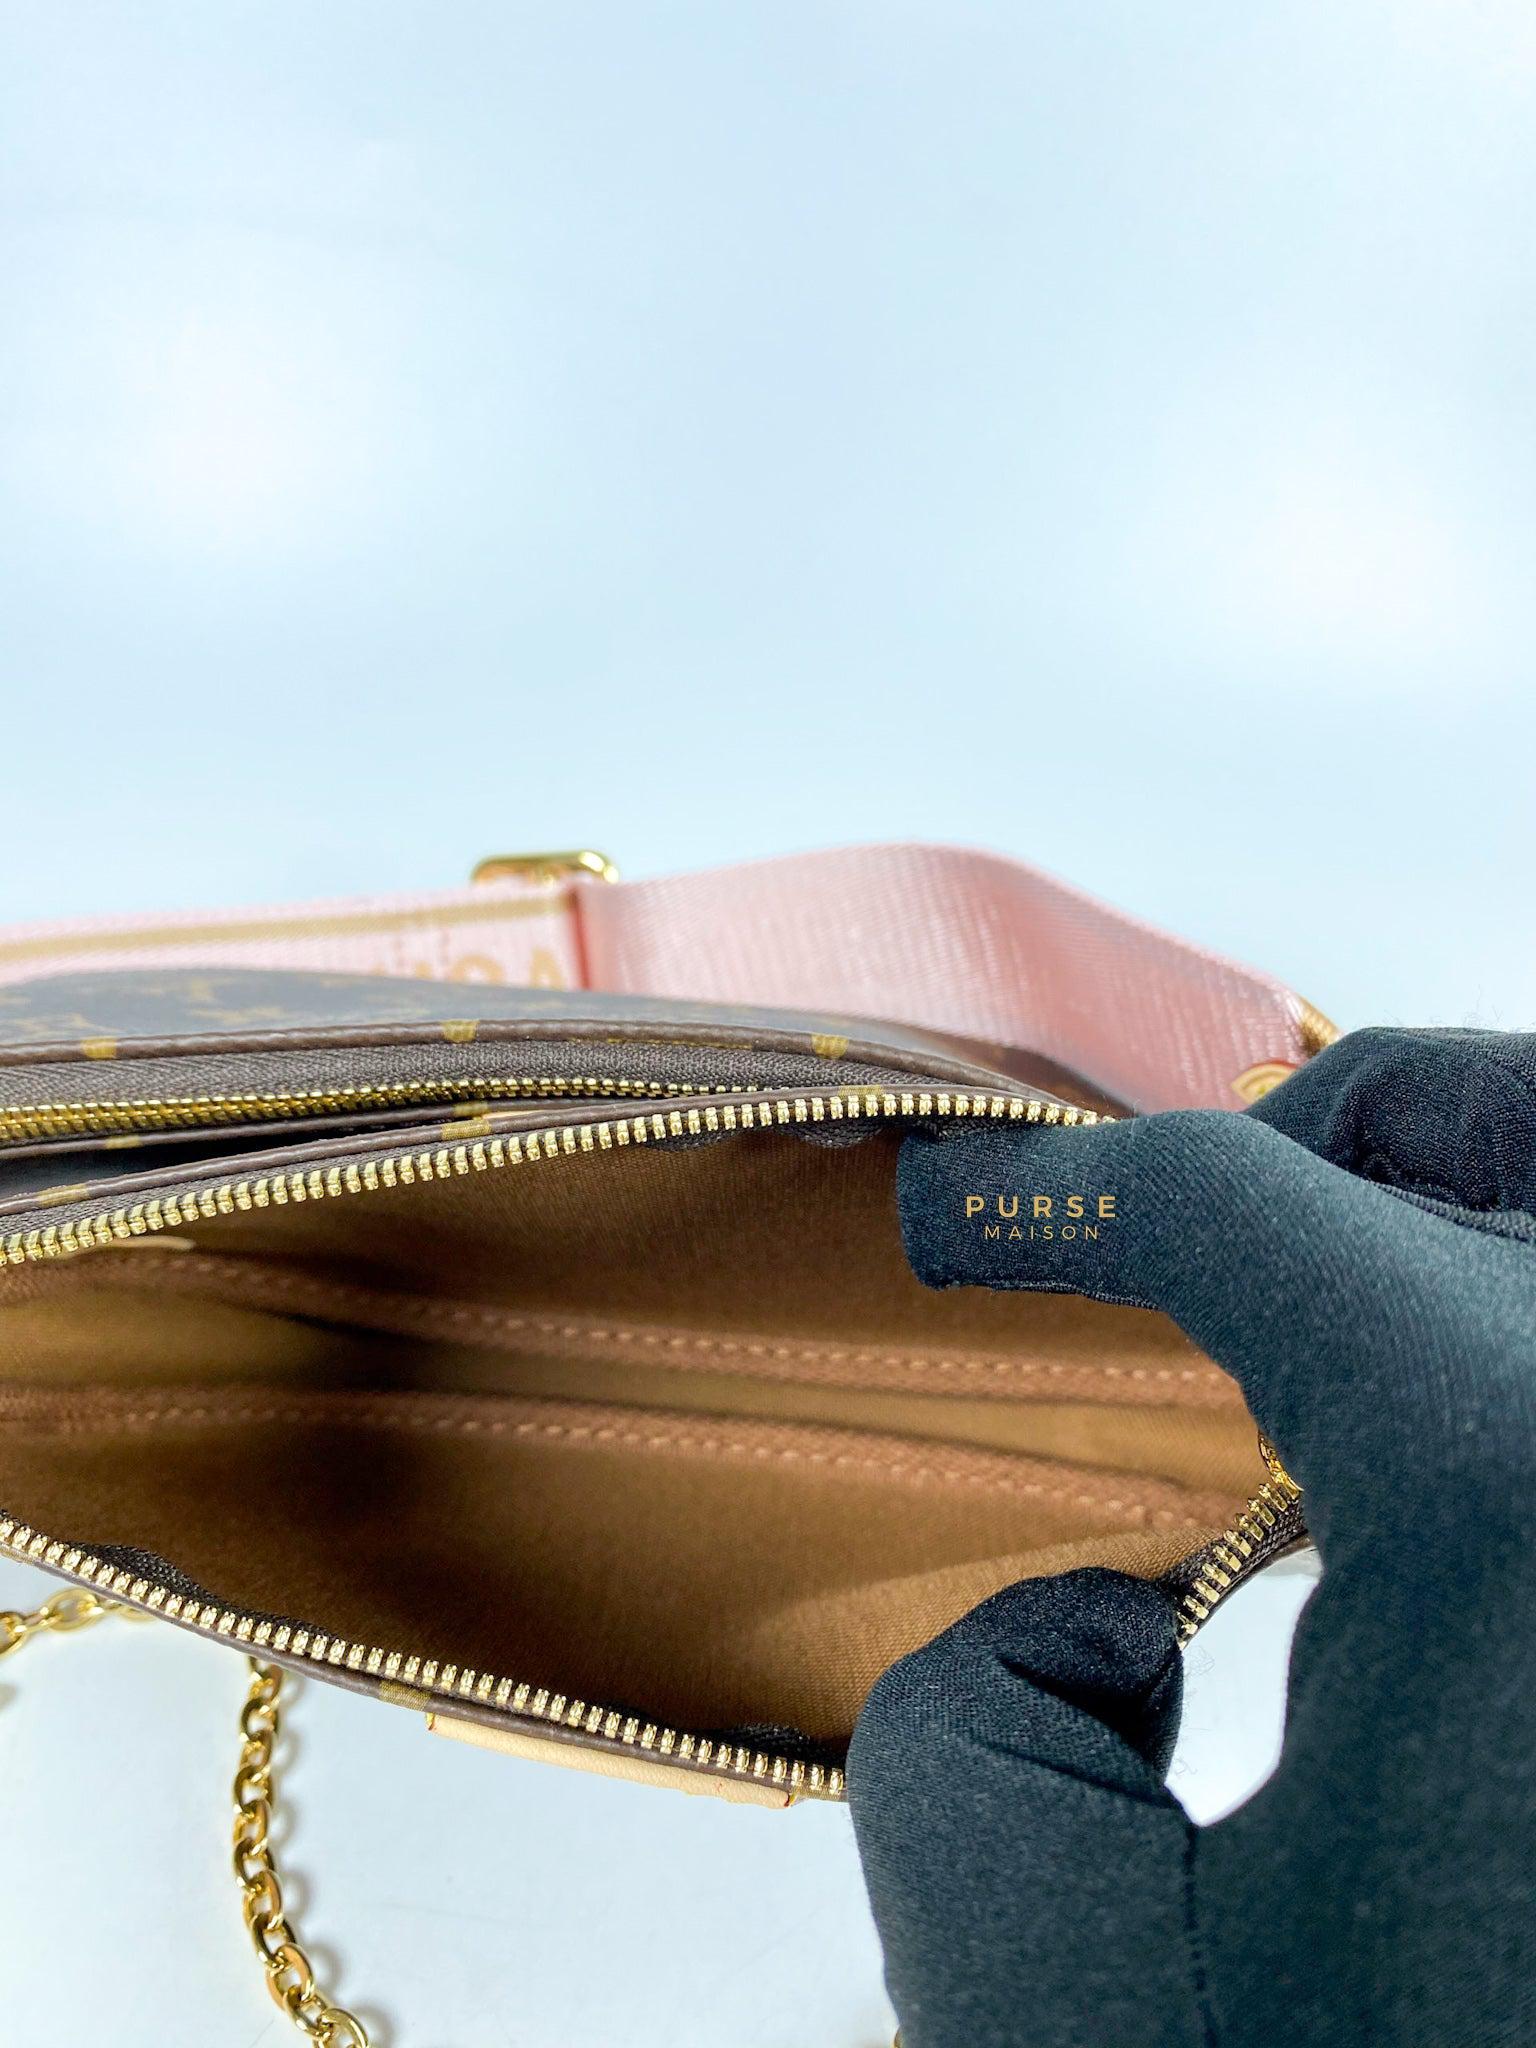 Louis Vuitton Multi Pochette in Rose Ballerine (Microchip)